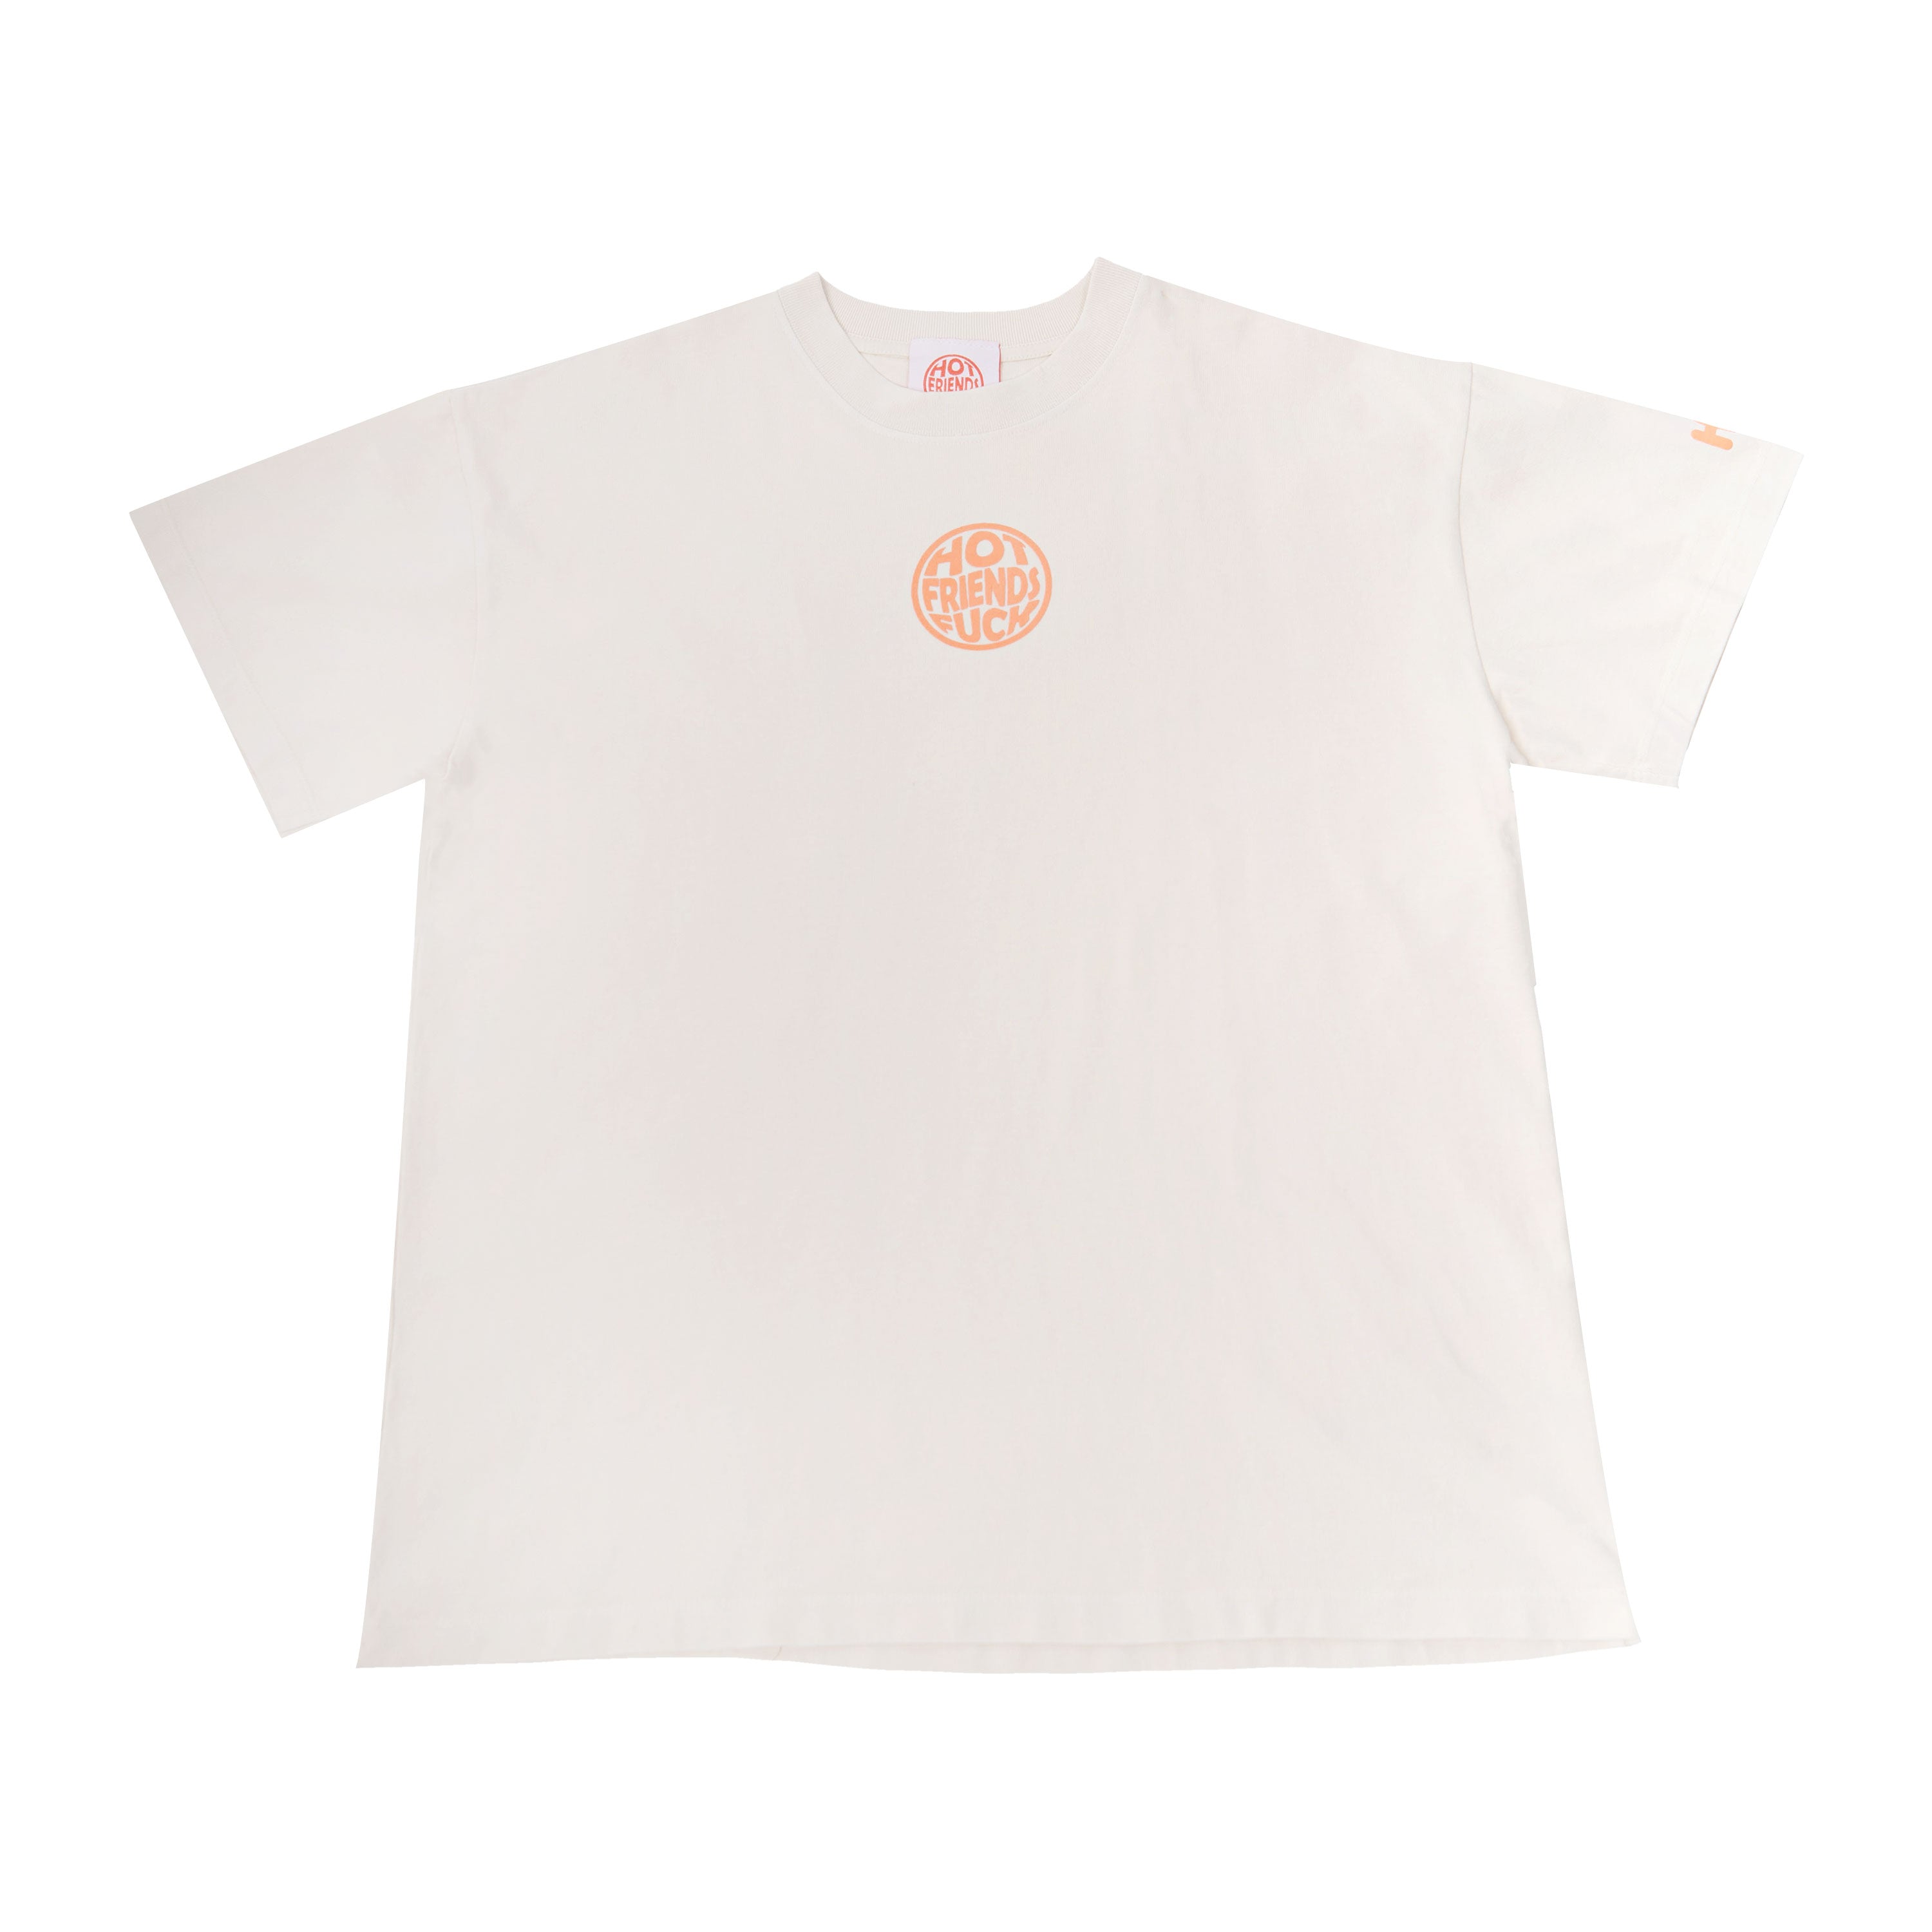 Cream Shirt with Salmon Pink Puff Print.